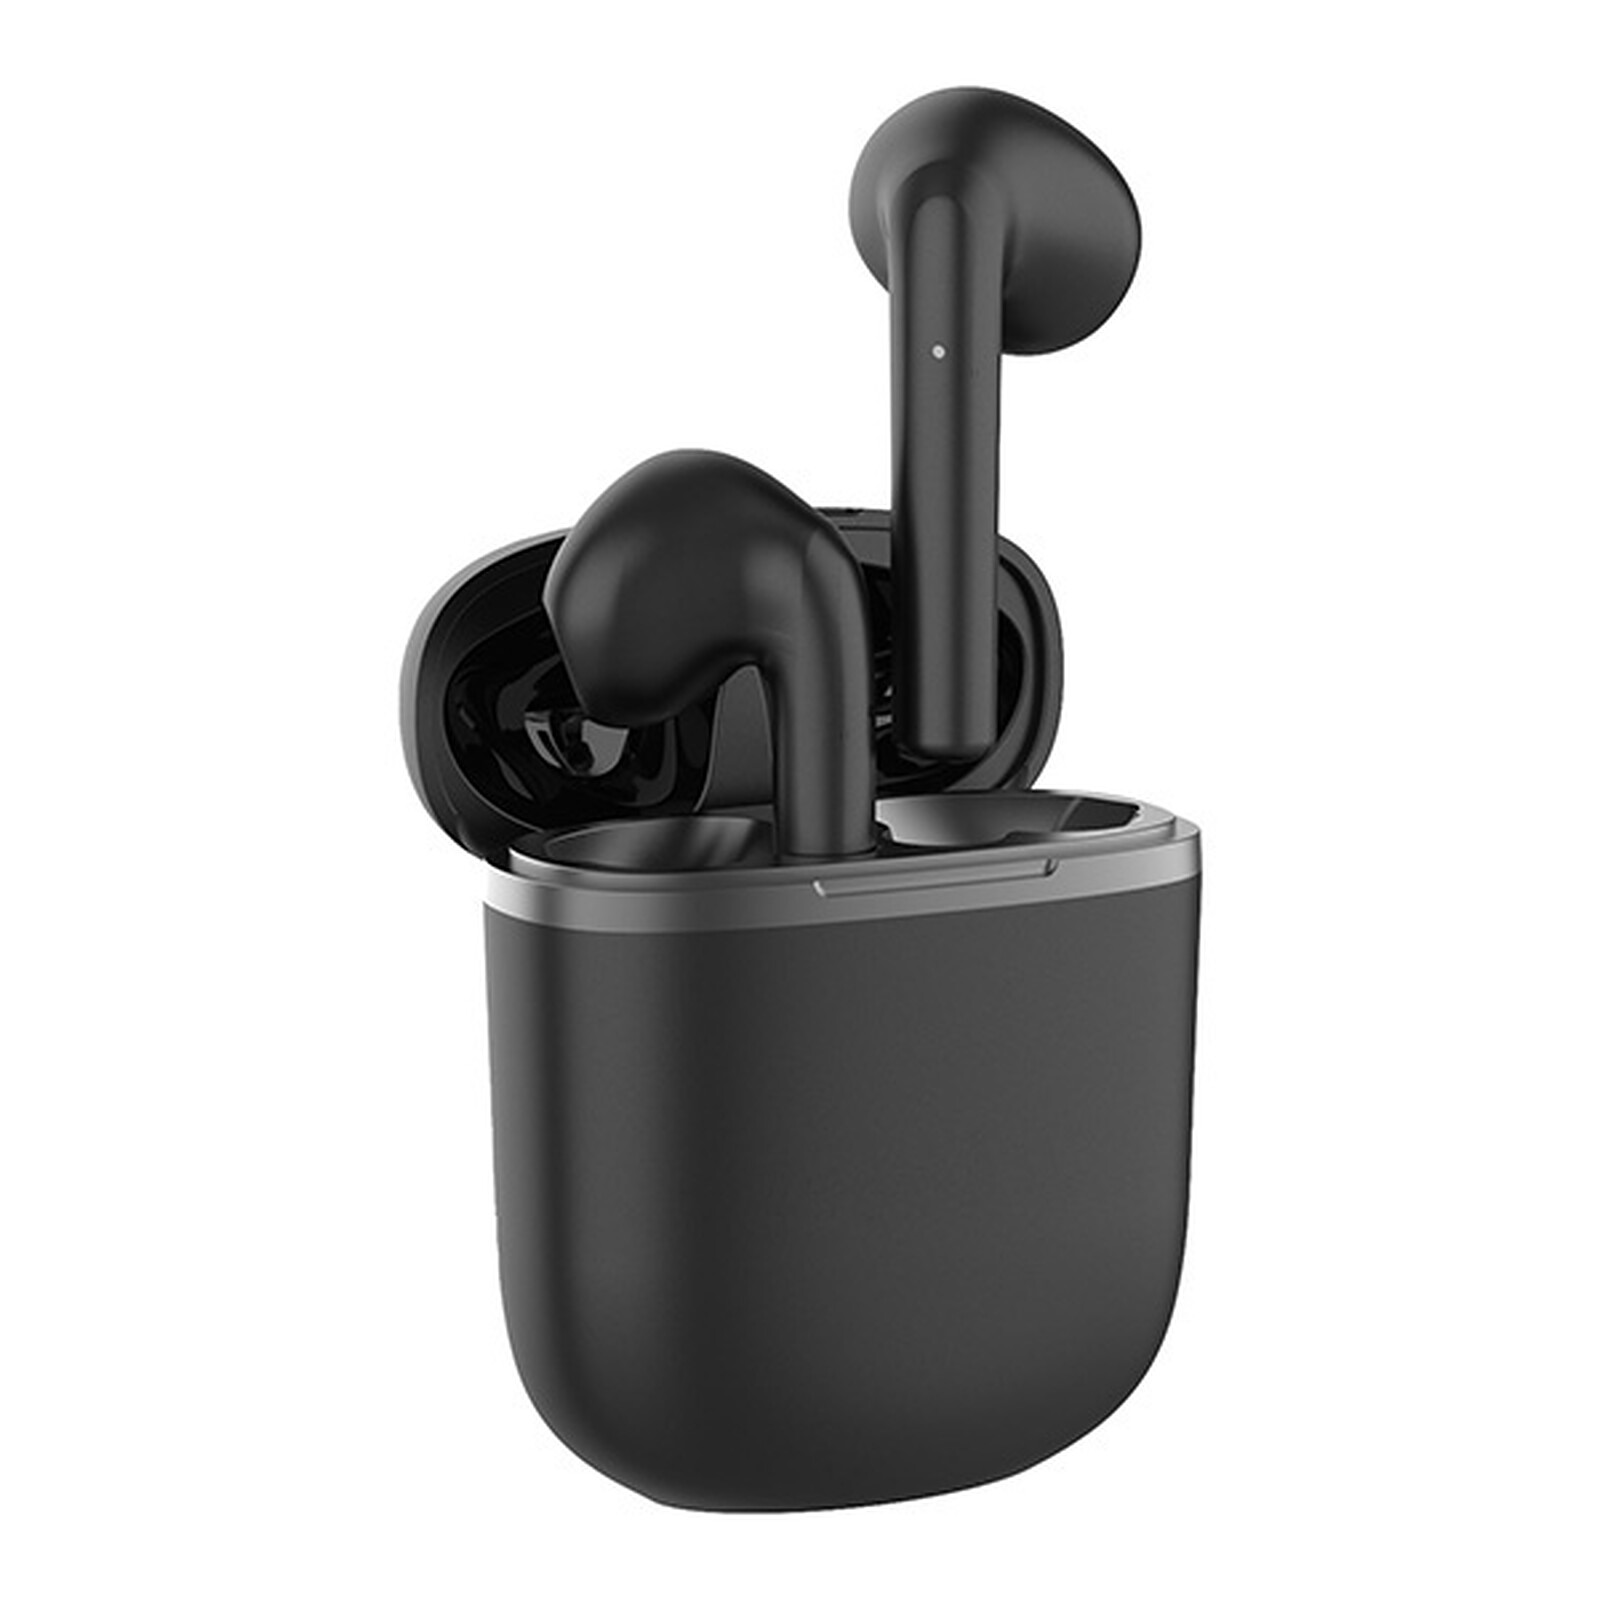 Auriculares Xiaomi Airdots Inalambricos Bluetooth 5.0 Manos Libres